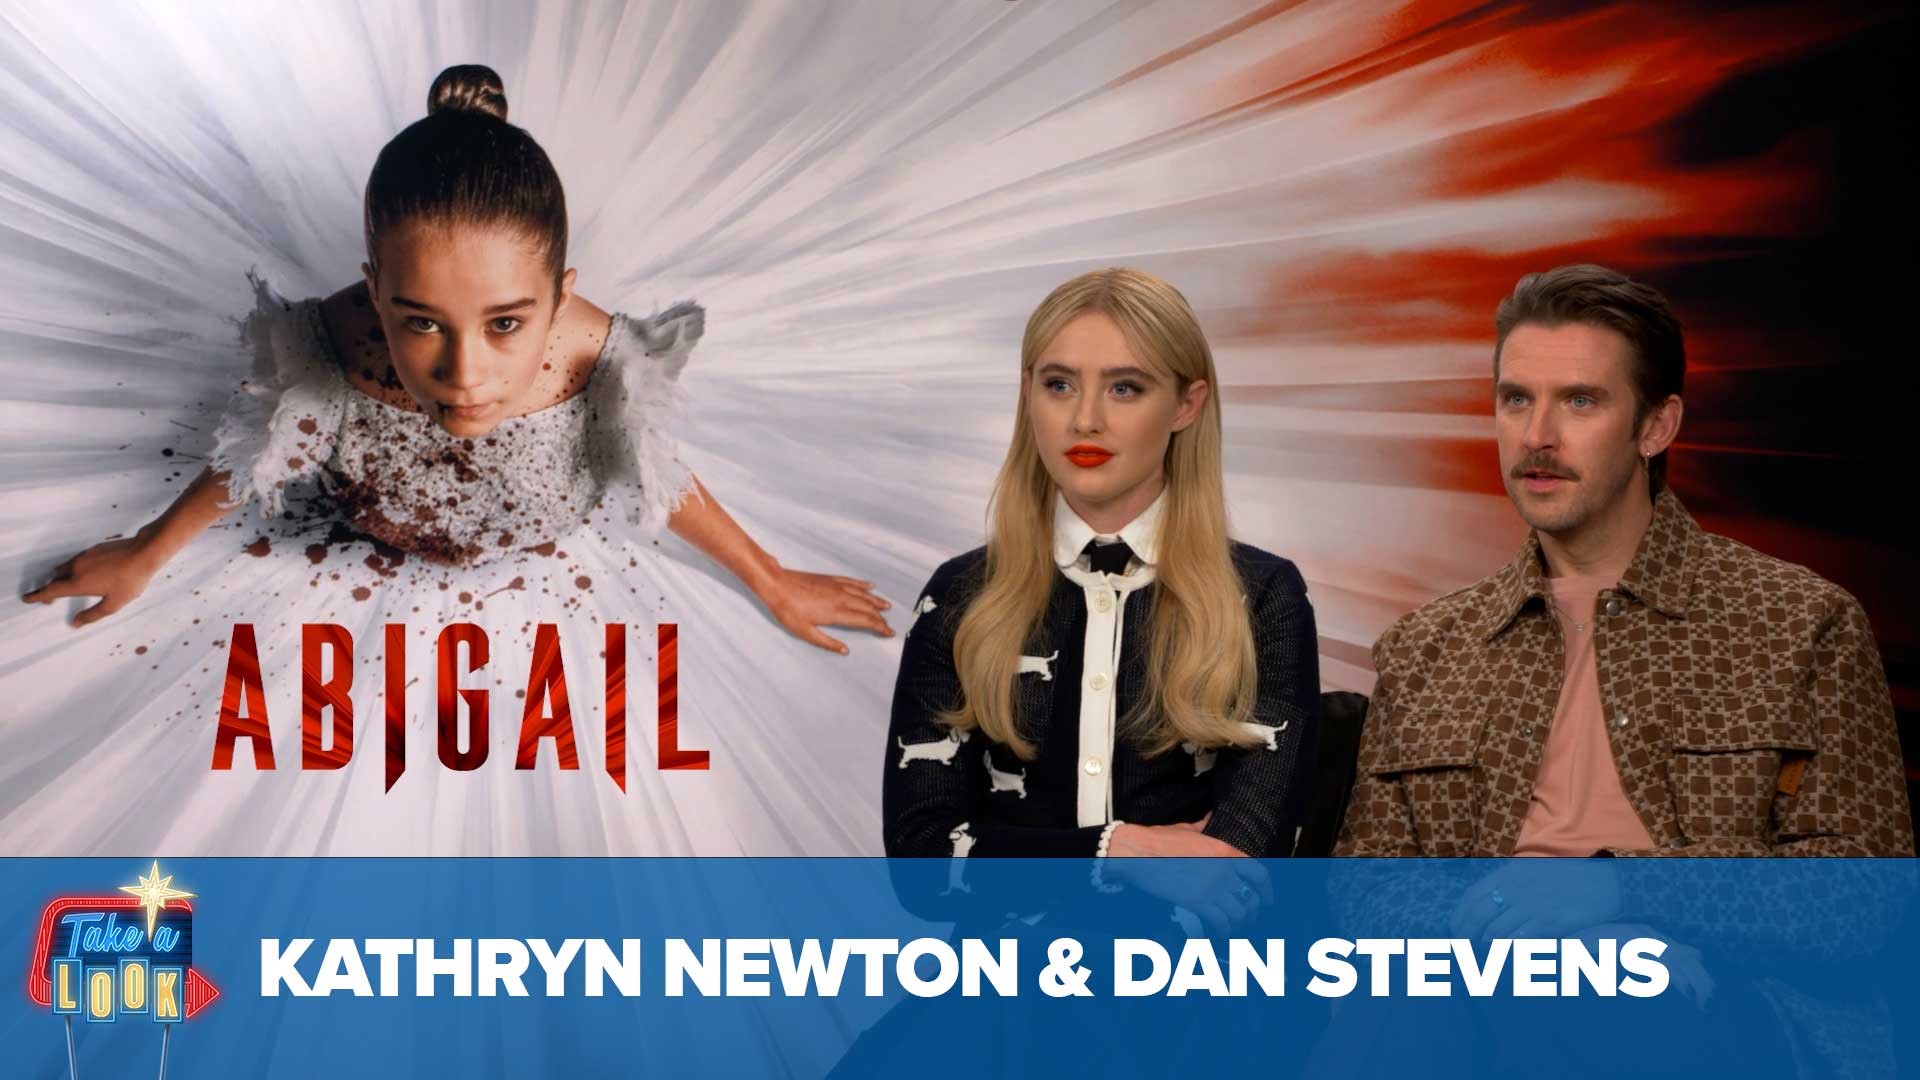 Meet the stars of "Abigail": Kathryn Newton and Dan Stevens | Interview